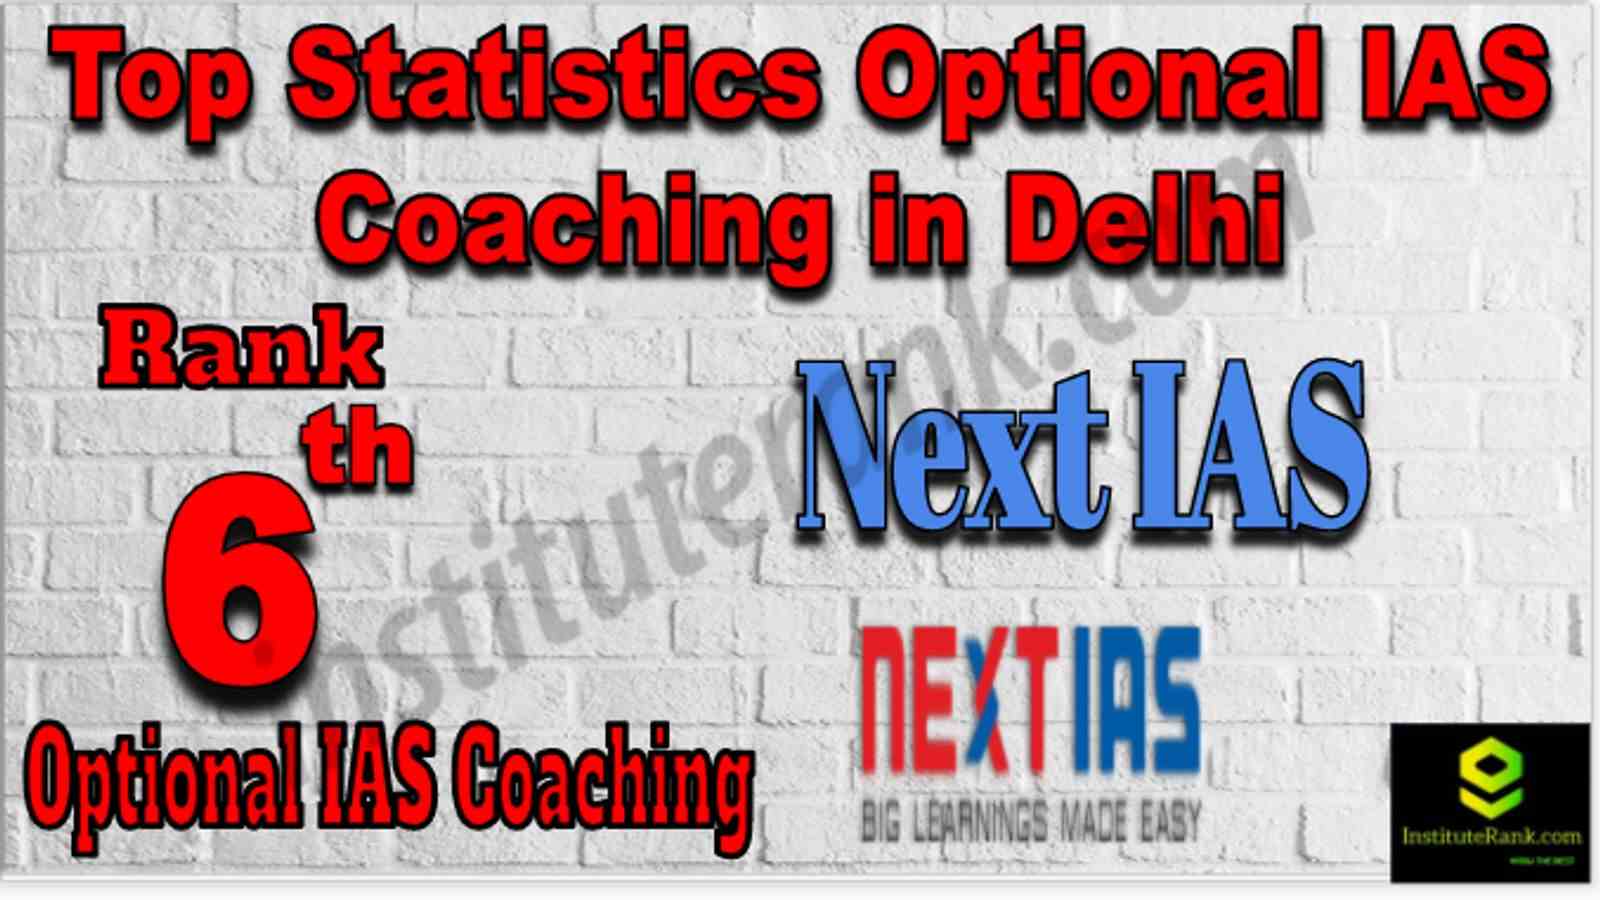 Rank 6 Top Statistics Optional IAS Coaching in Delhi